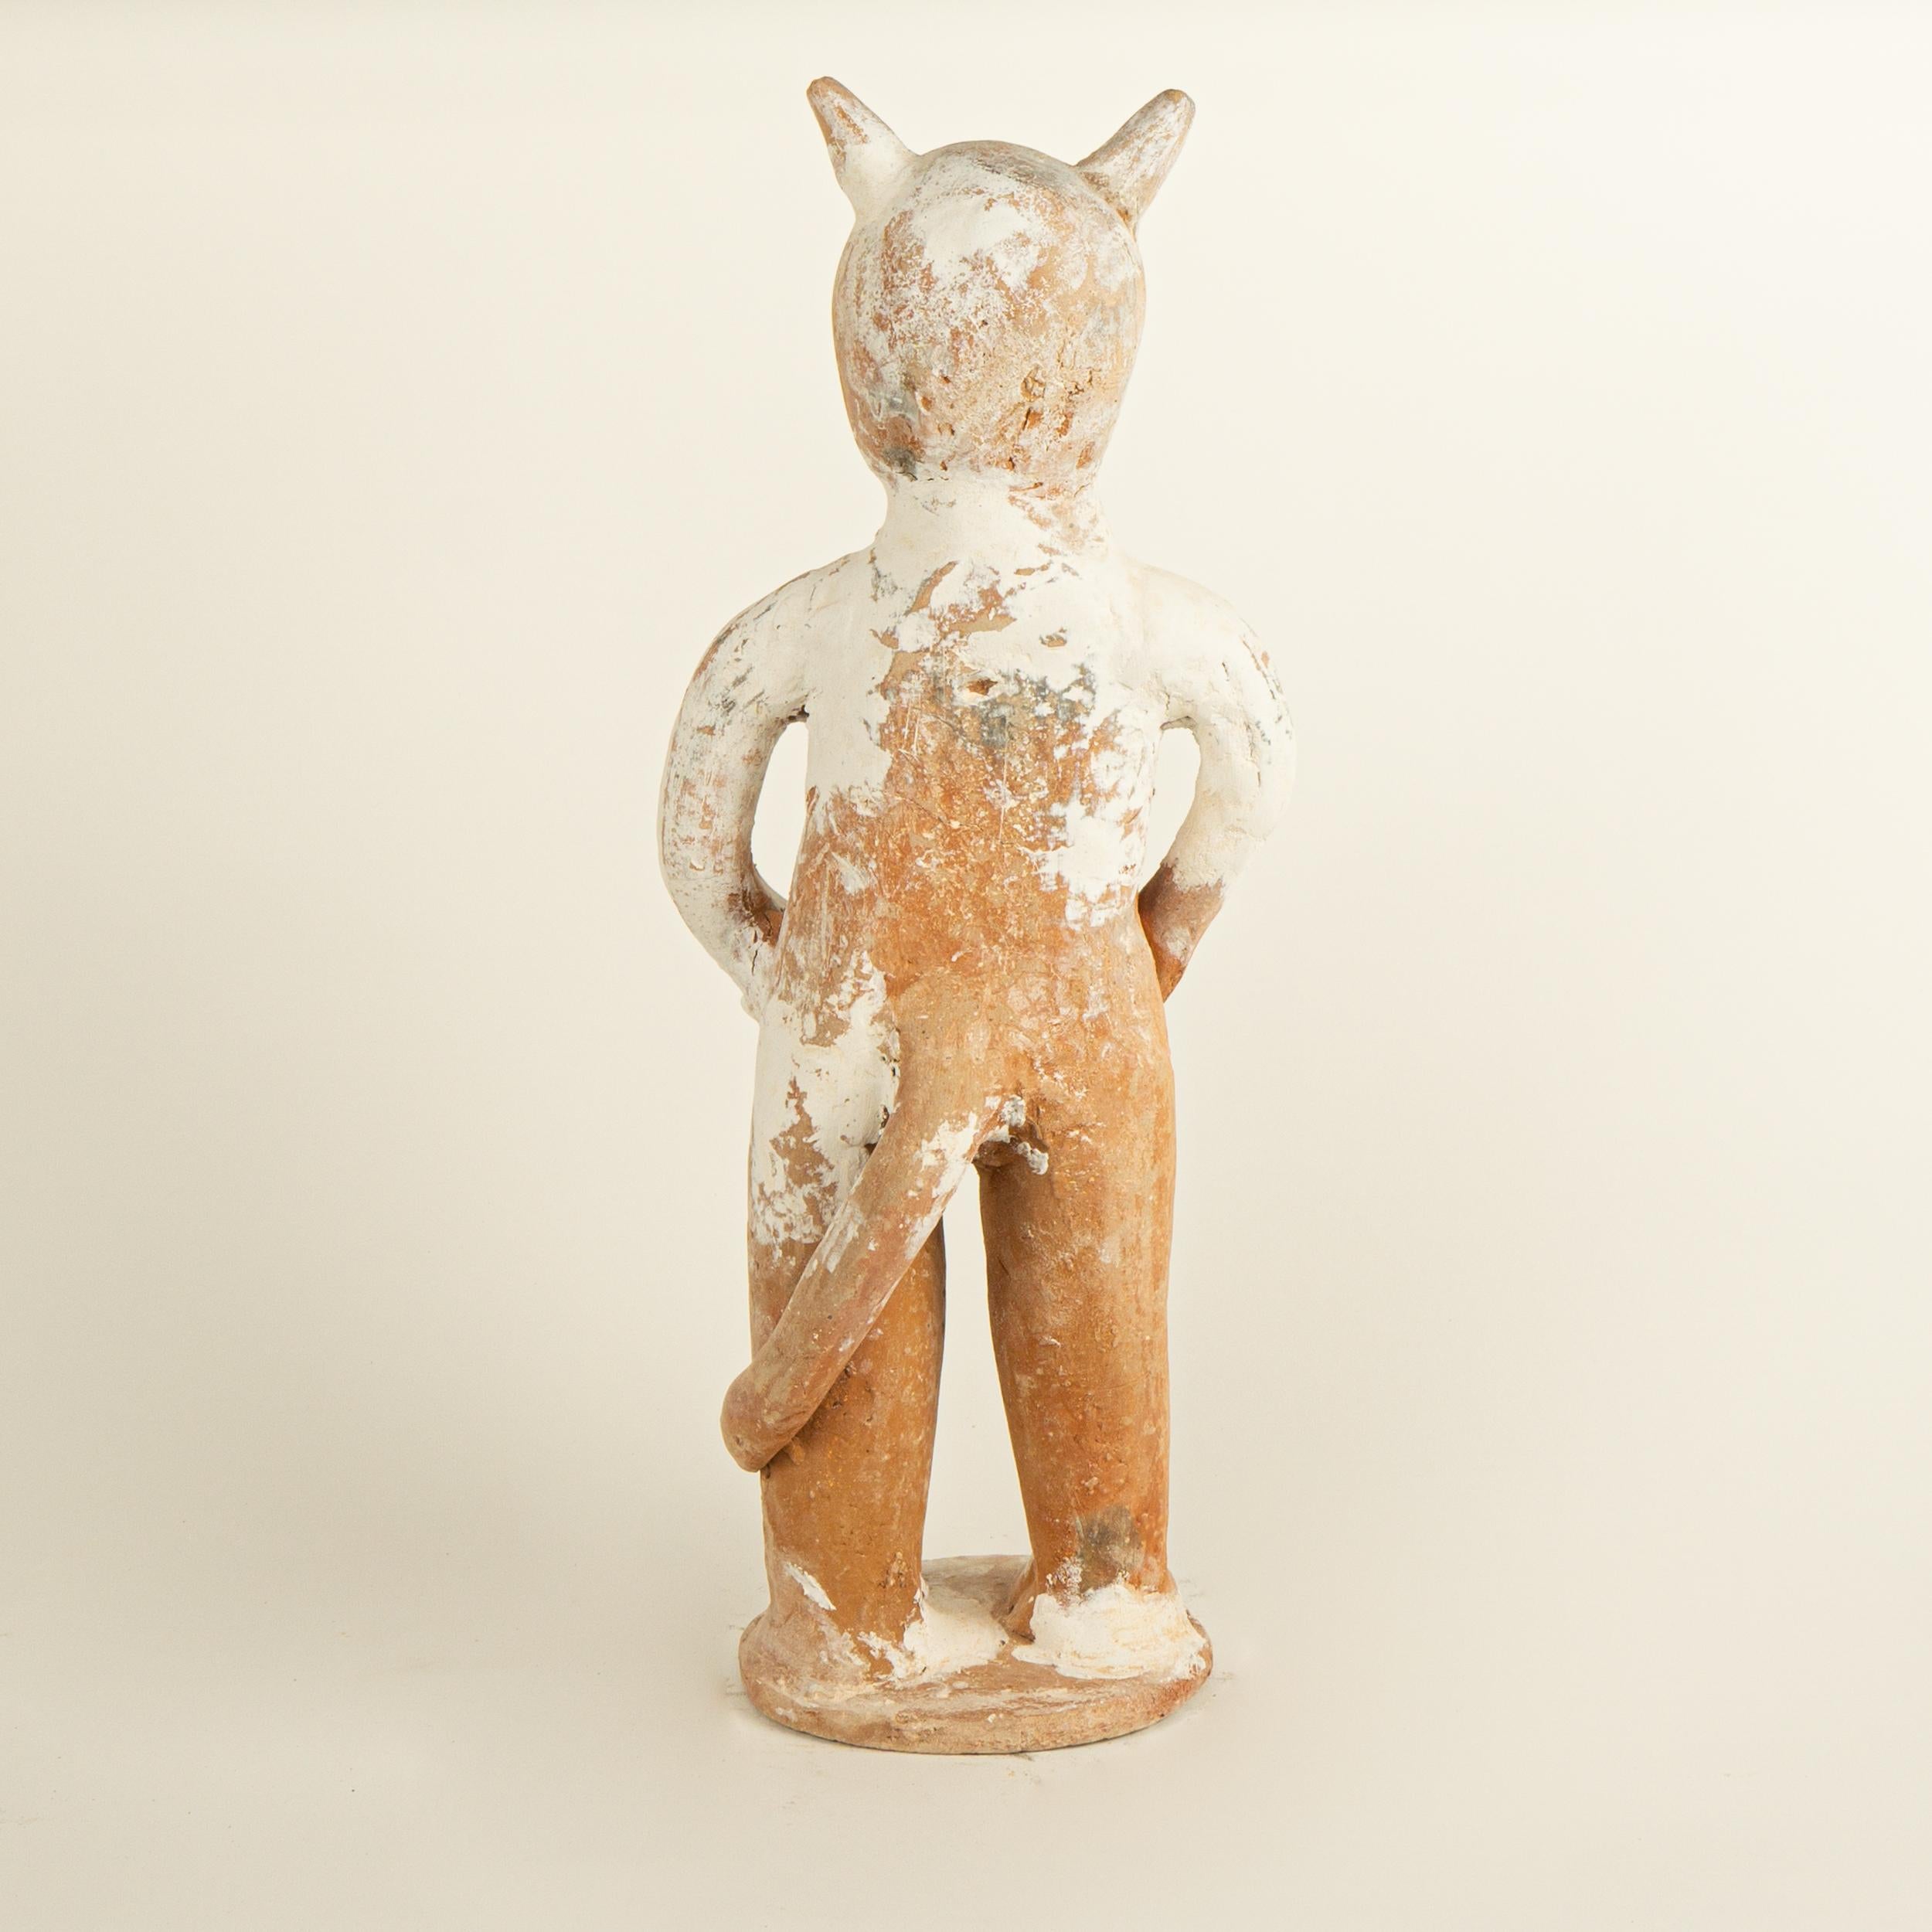 Terracota Sculptures handmade by Serapio Medrano, son of the late Candelario Medrano. 

 